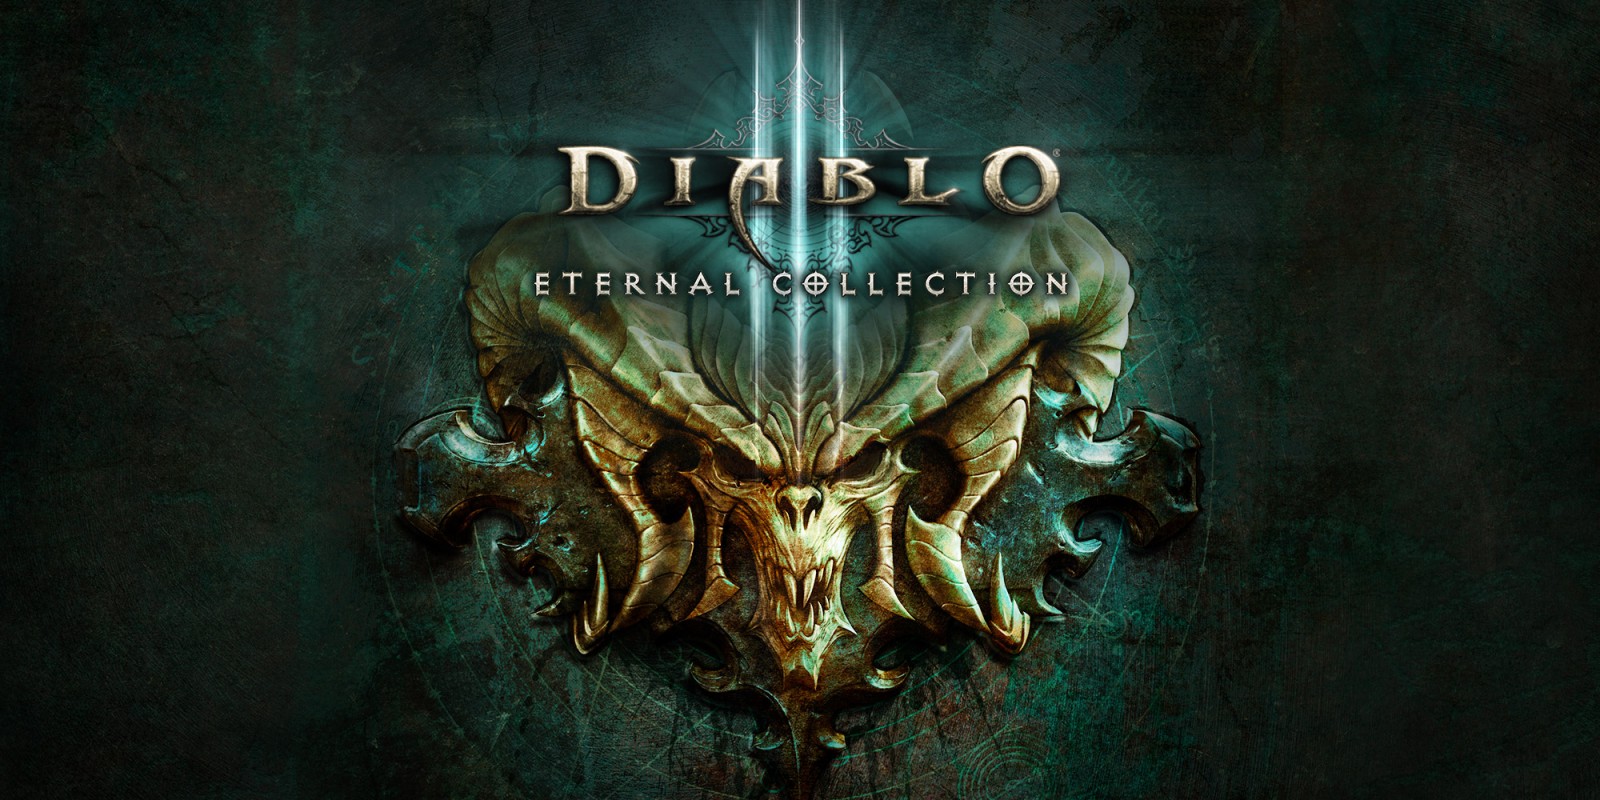 Diablo iii : eternal collection